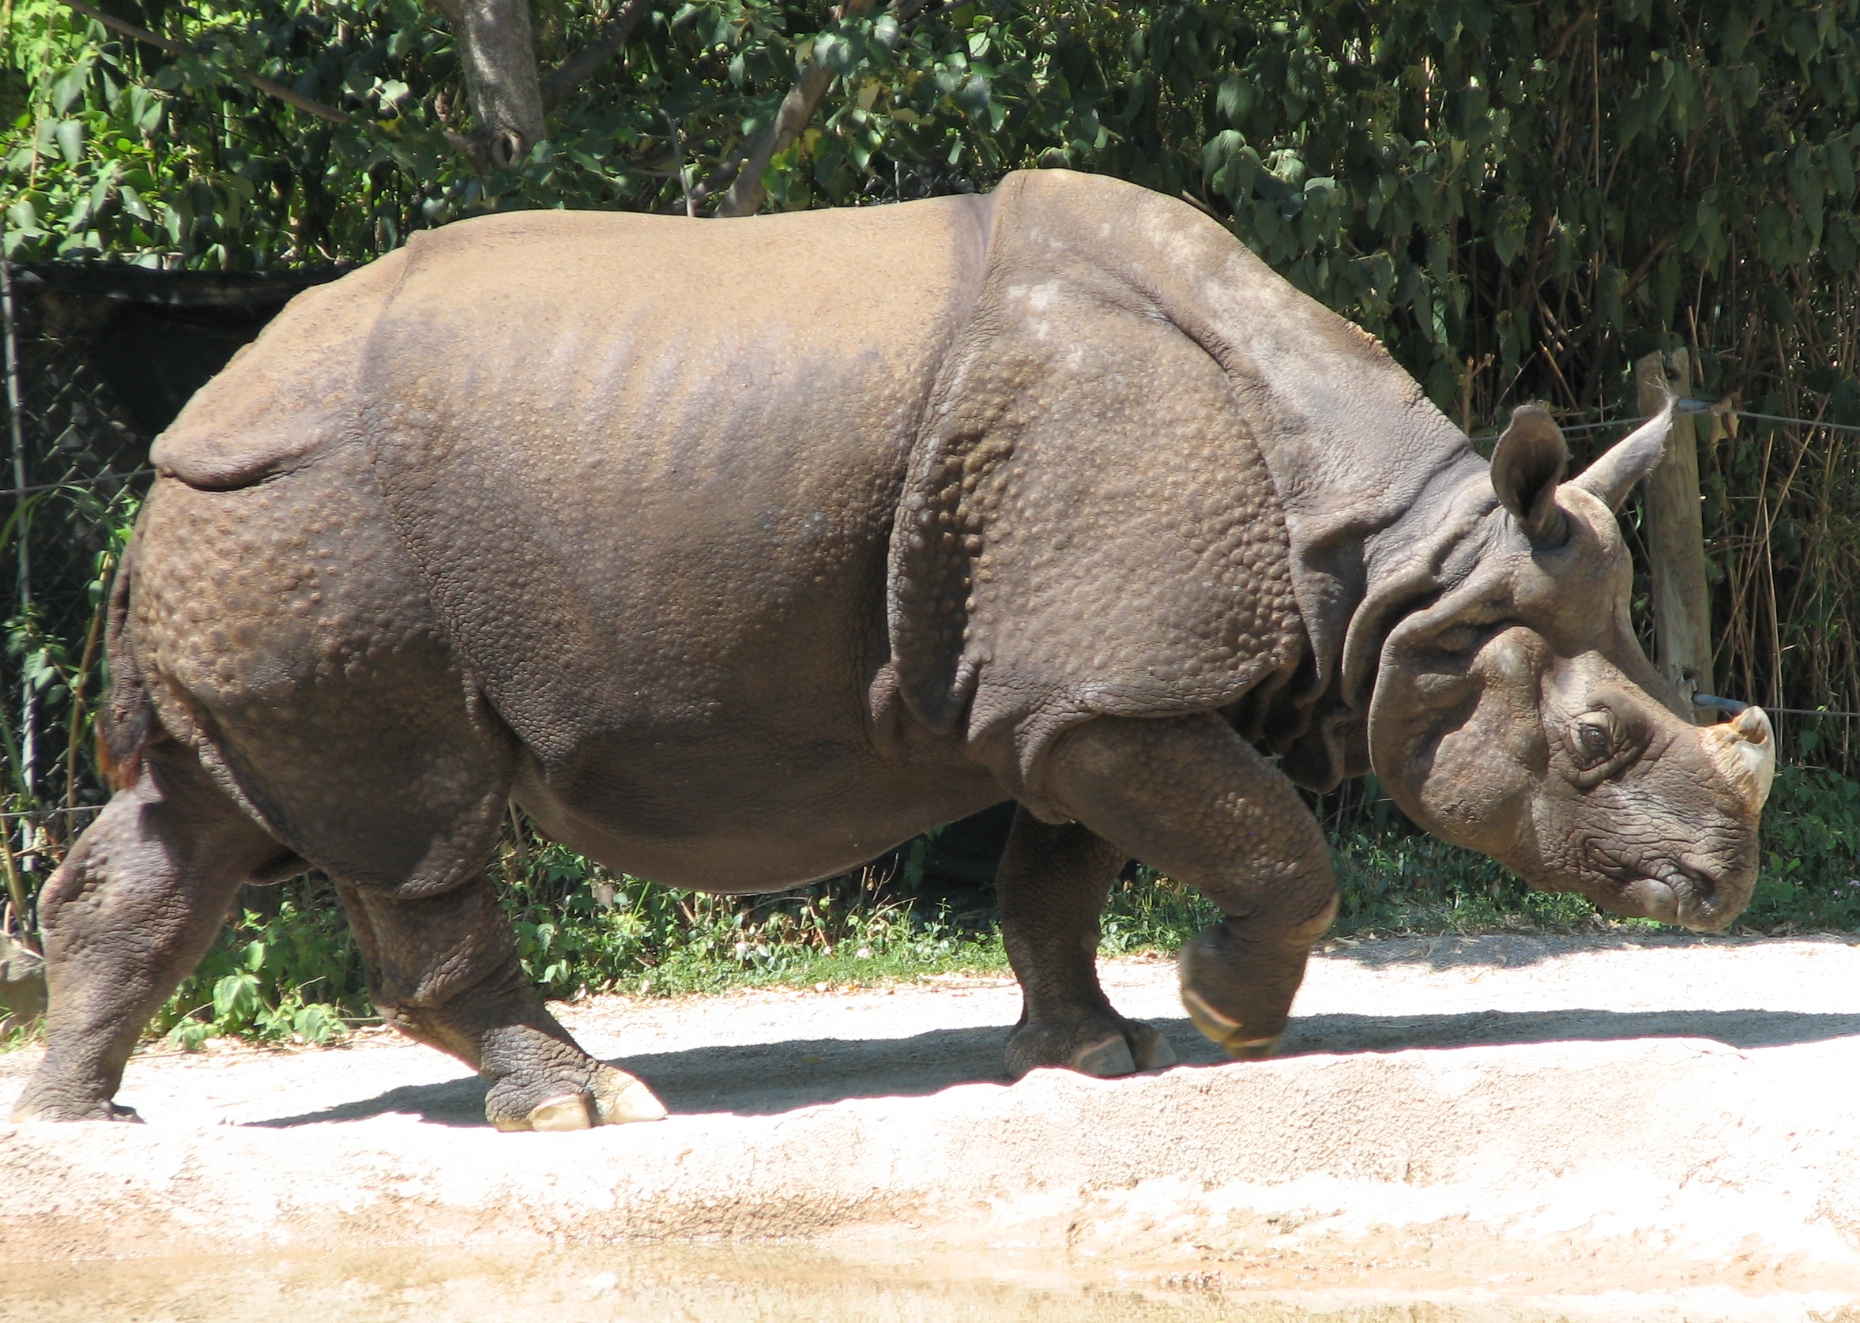 Rhinos in Kenya face a new threat: bacteria - study